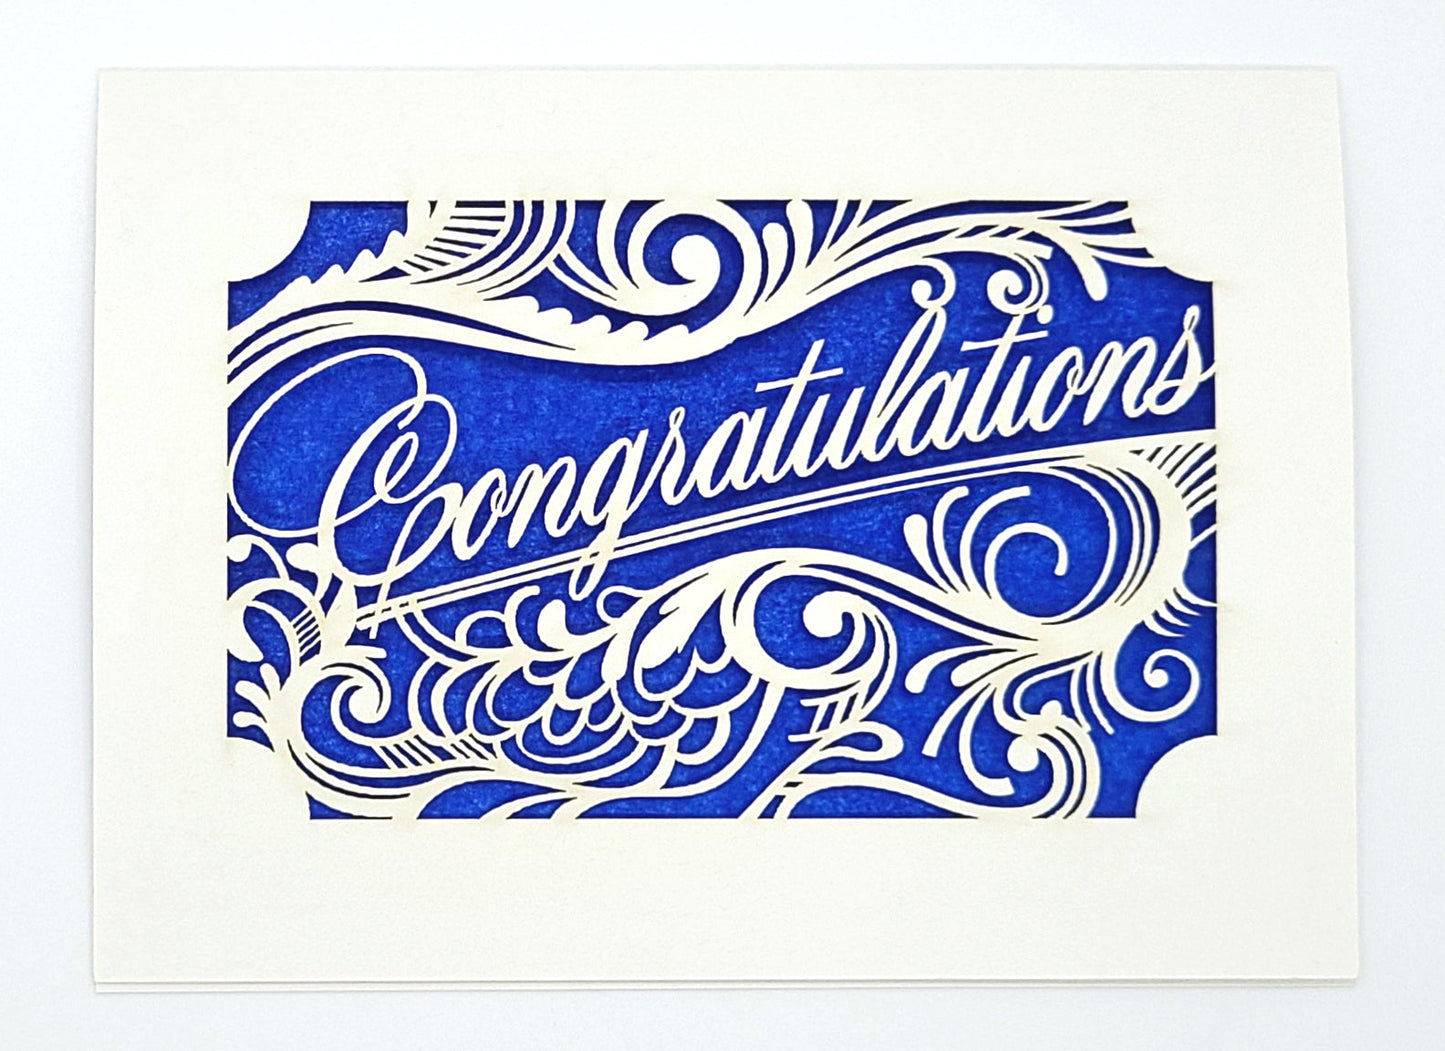 Papel Picado Greeting Card: Congratulations (Filigree)